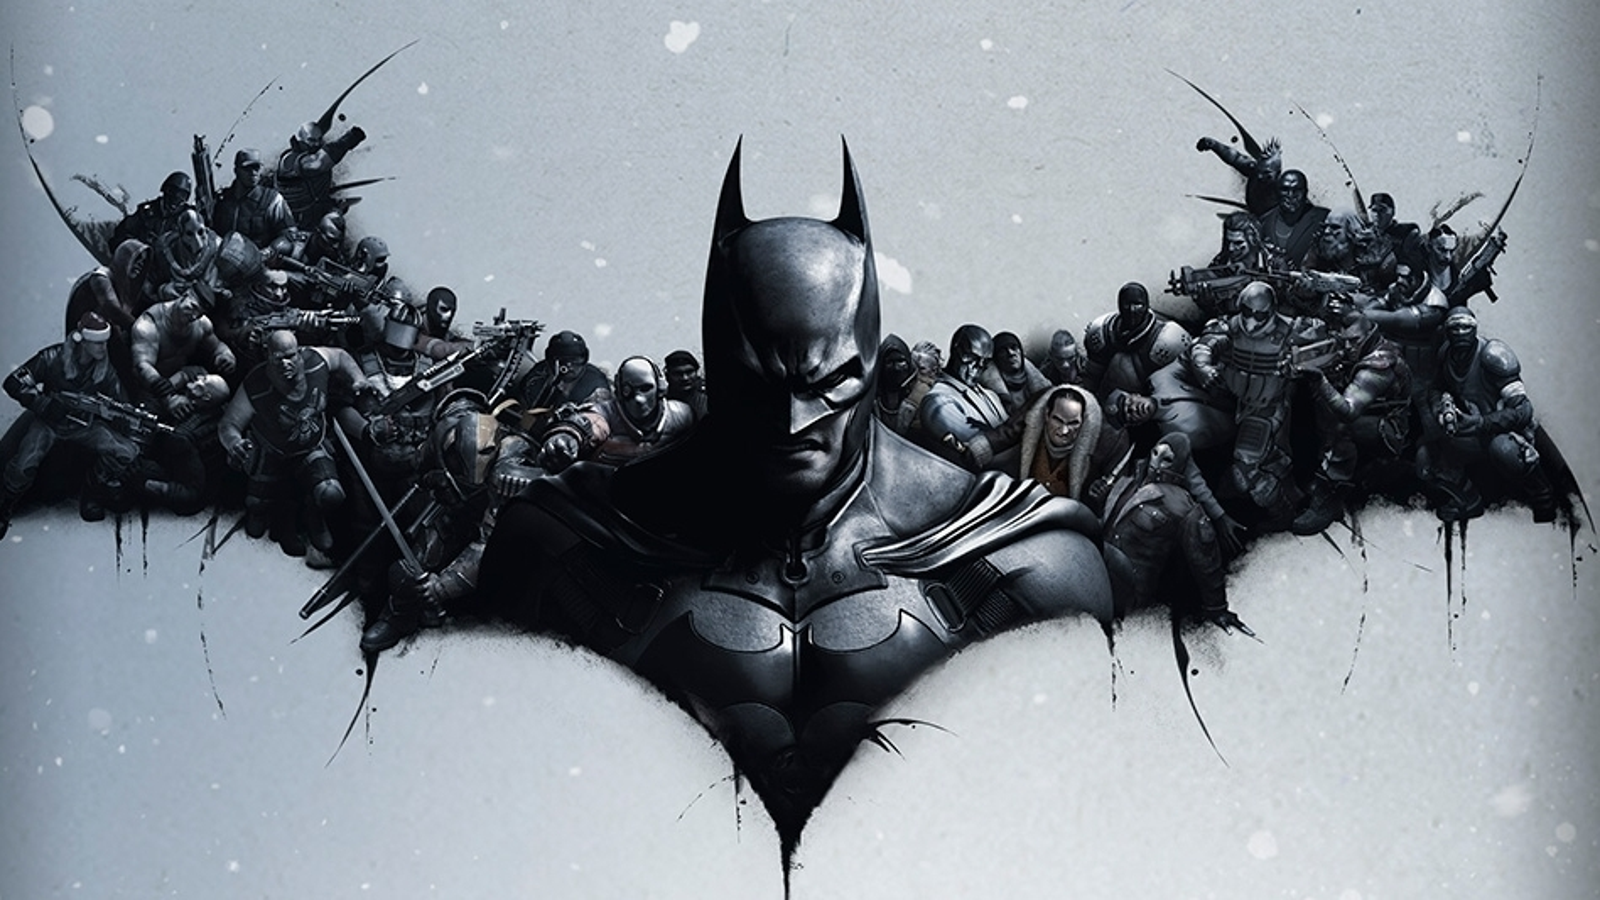 100+] Batman Arkham City Iphone Wallpapers